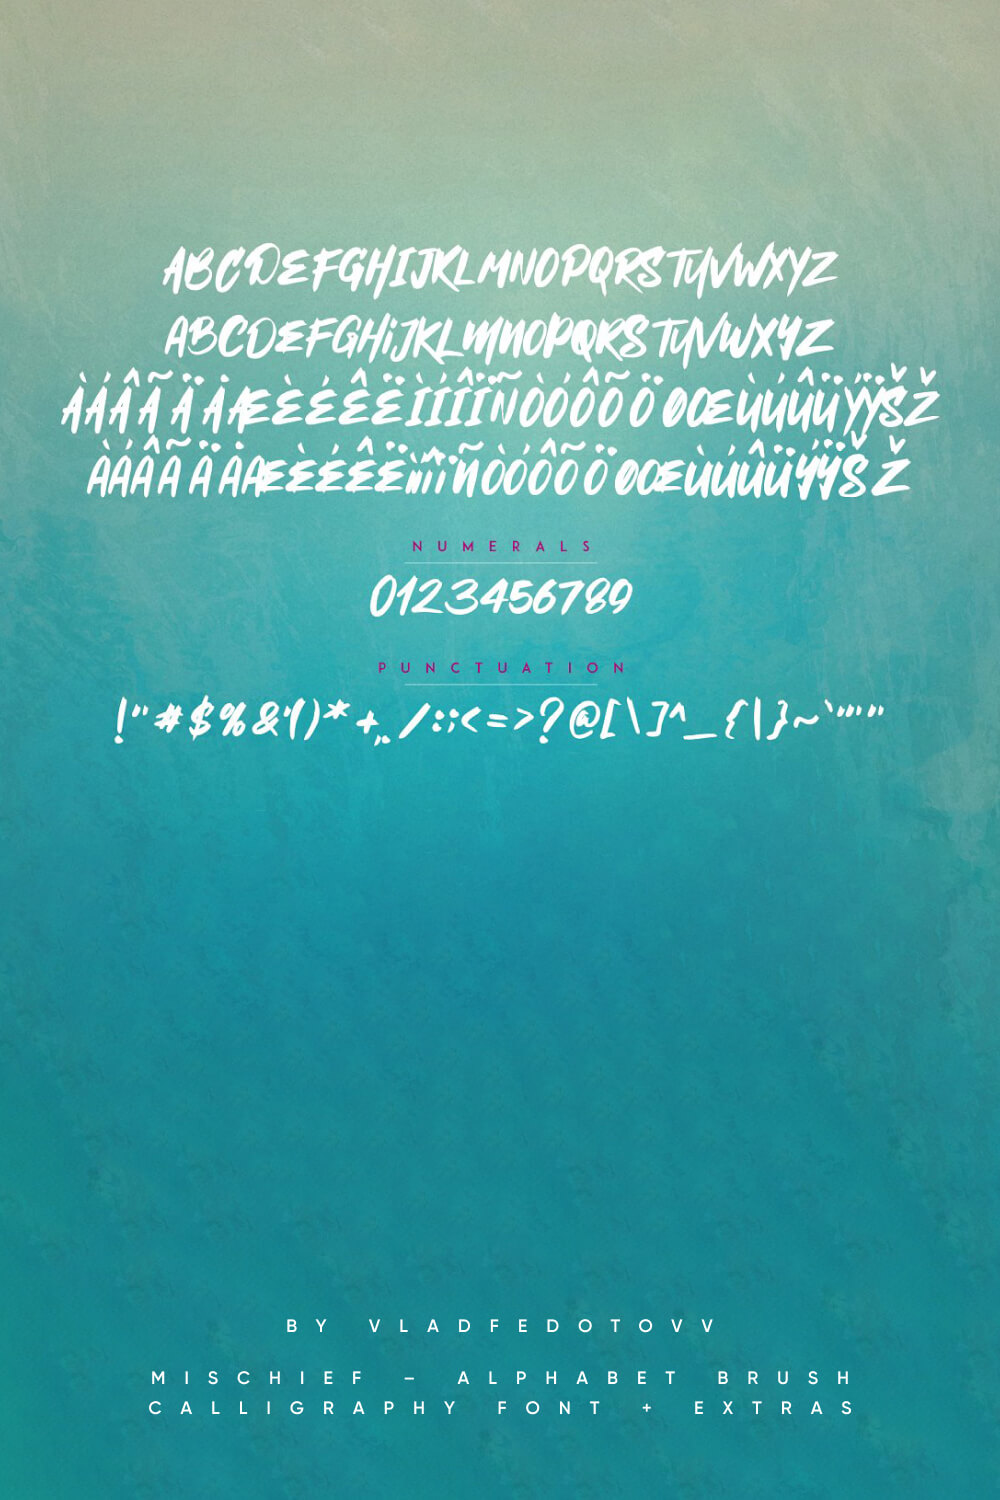 01. Mischief – Alphabet Brush Calligraphy Font Extras 1000 x 1500